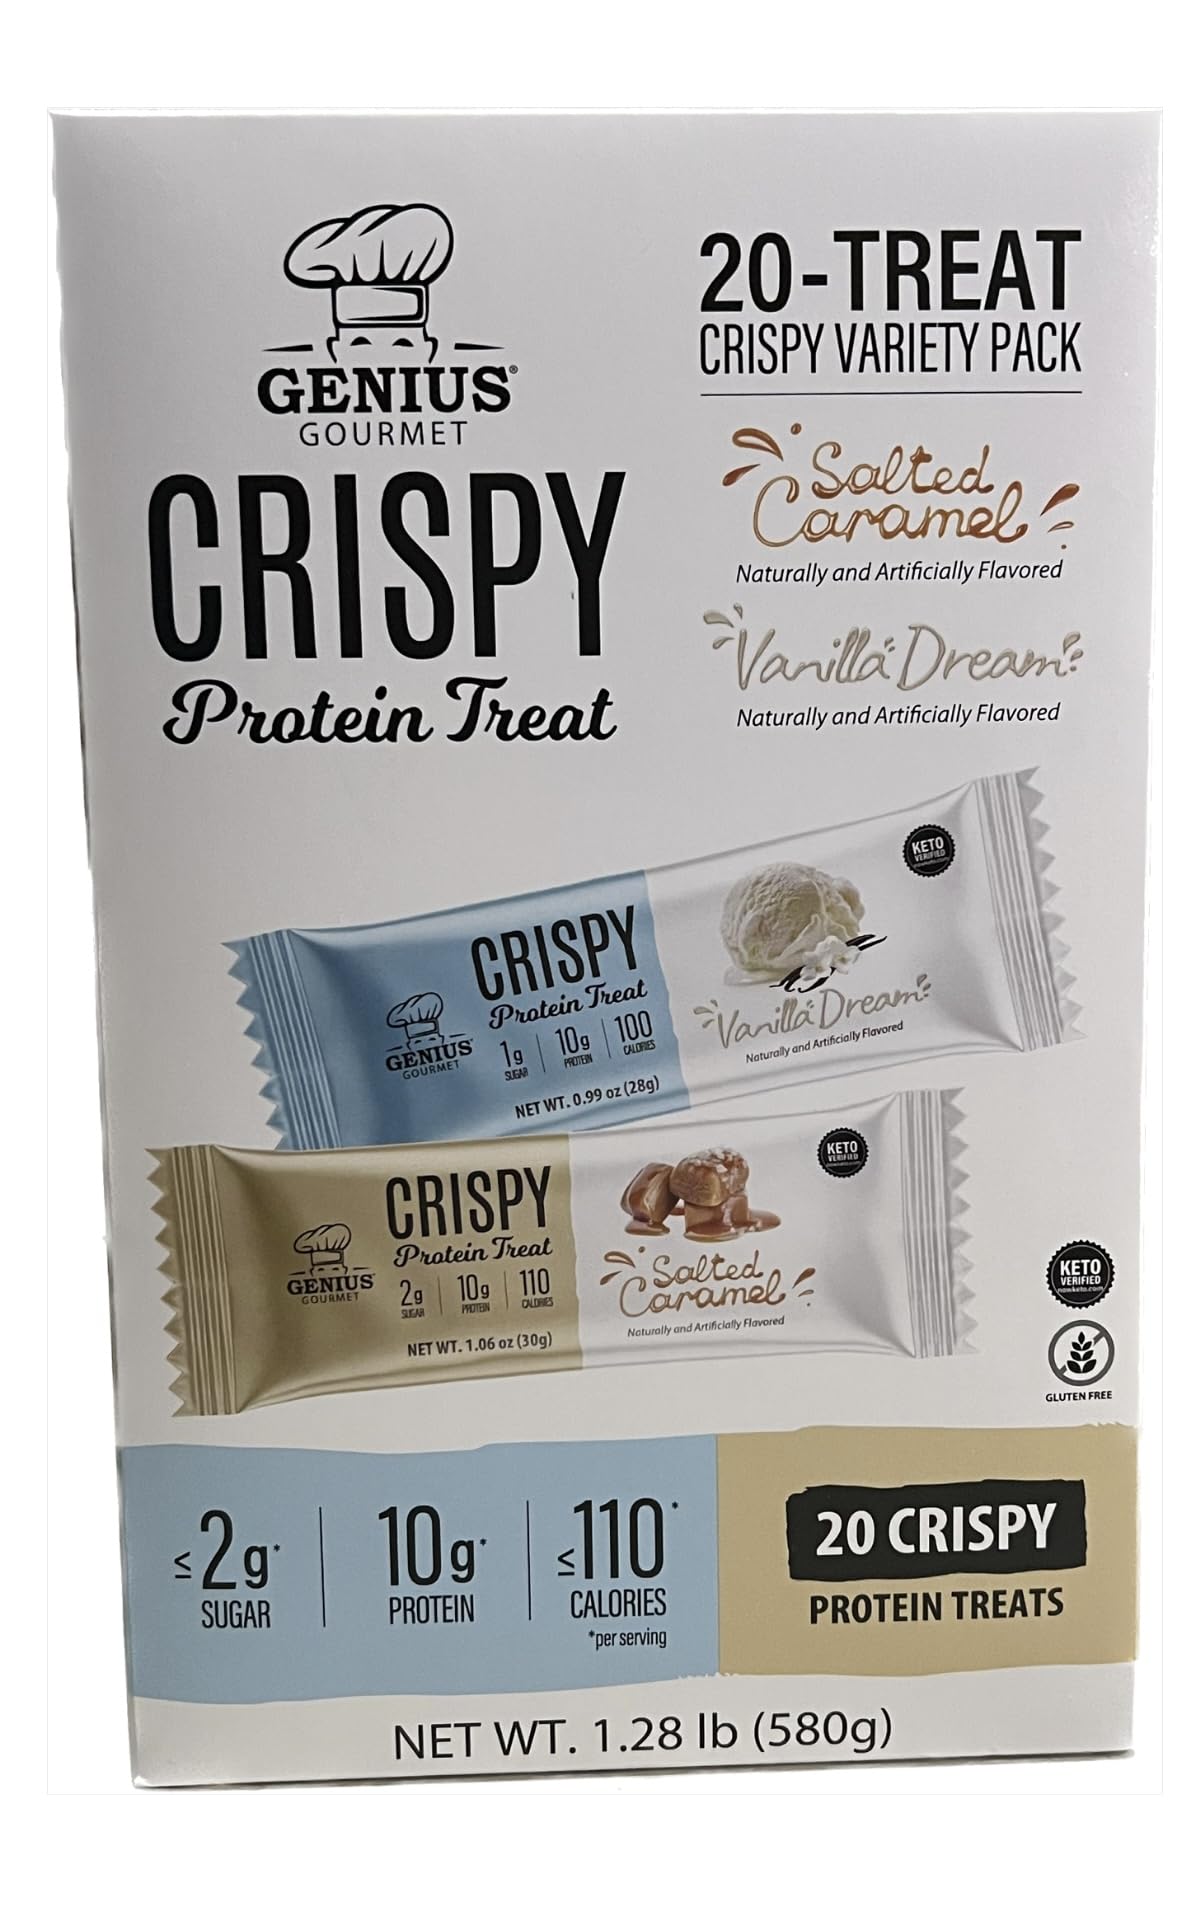 Genius Gourmet Crispy Protein Treat, 20-Treat Crispy Variety Pack Salted Caramel & Vanilla Dream